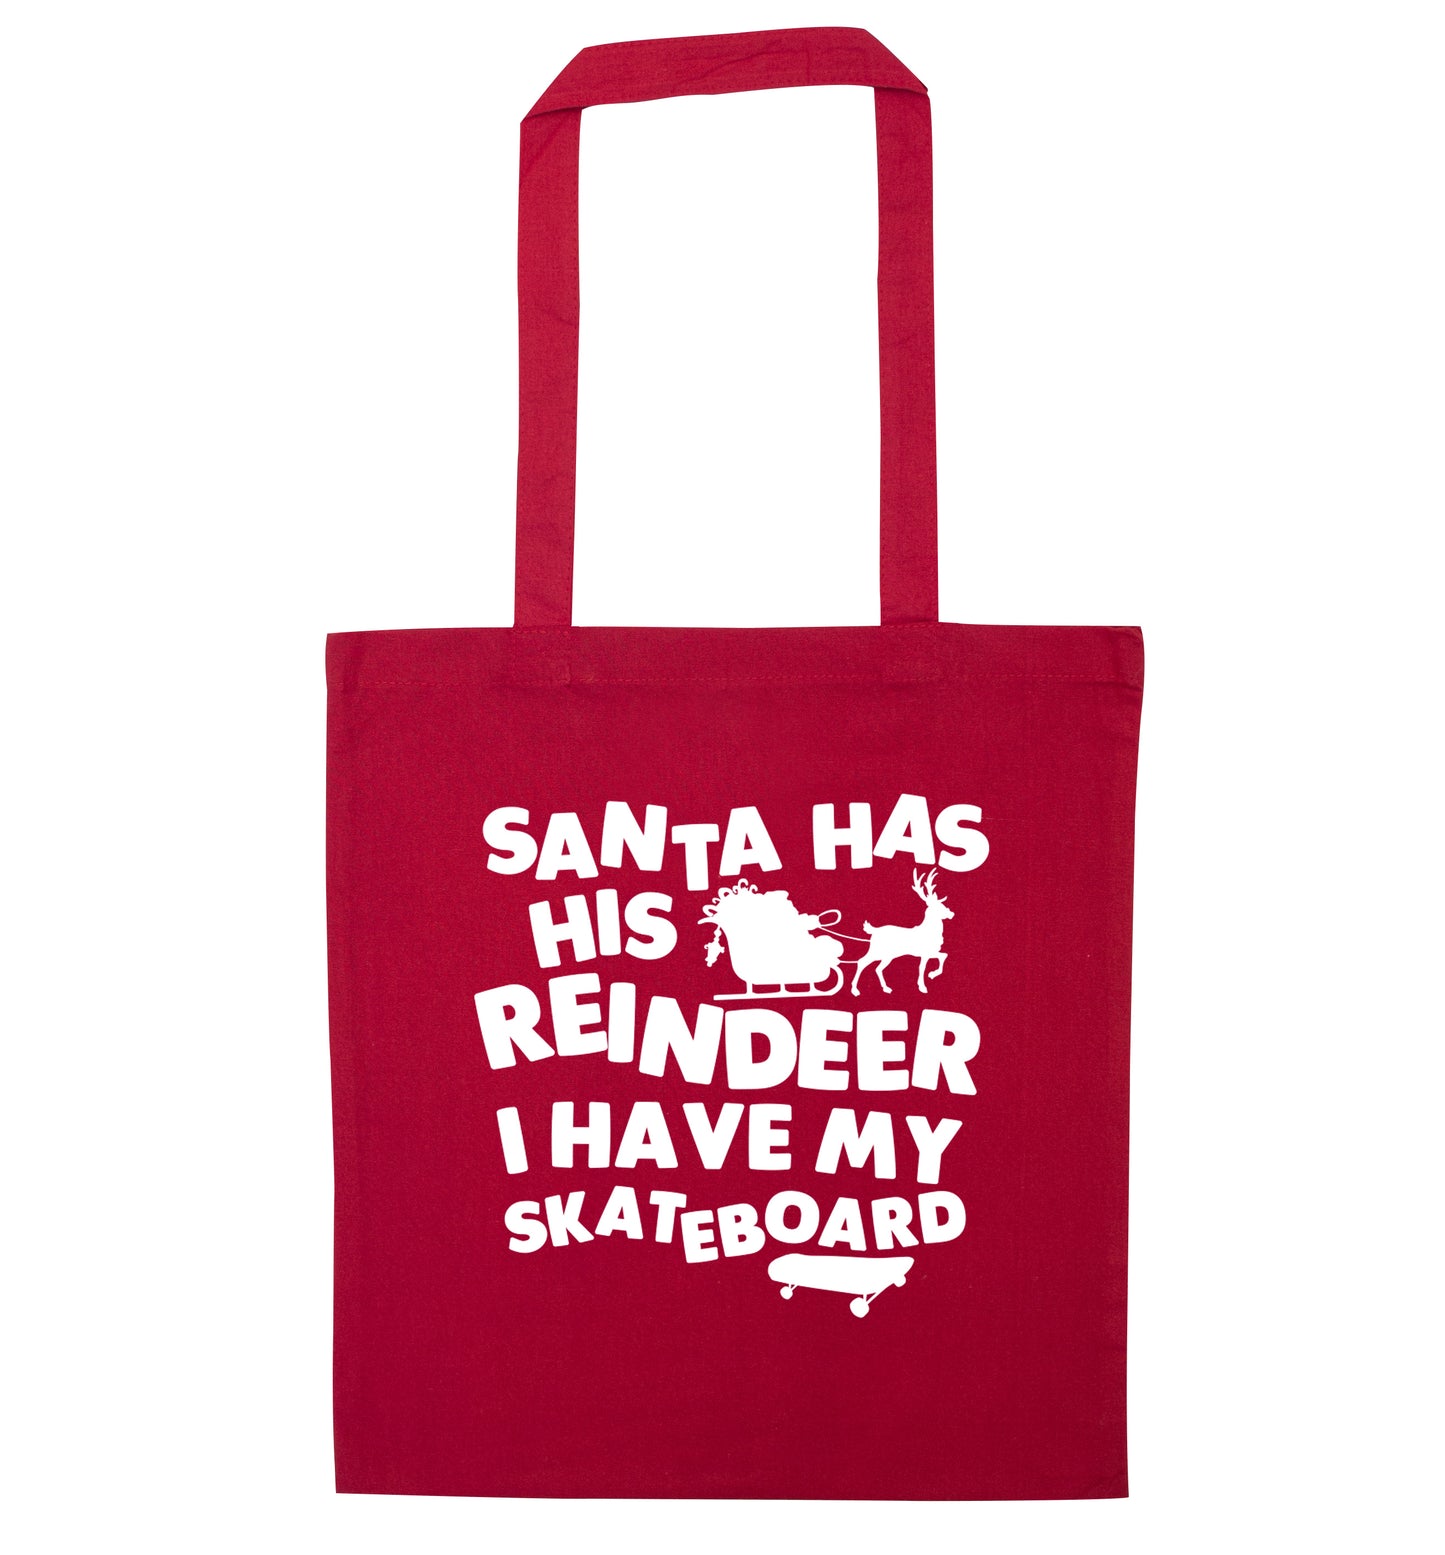 Santa has his reindeer I have my skateboard red tote bag